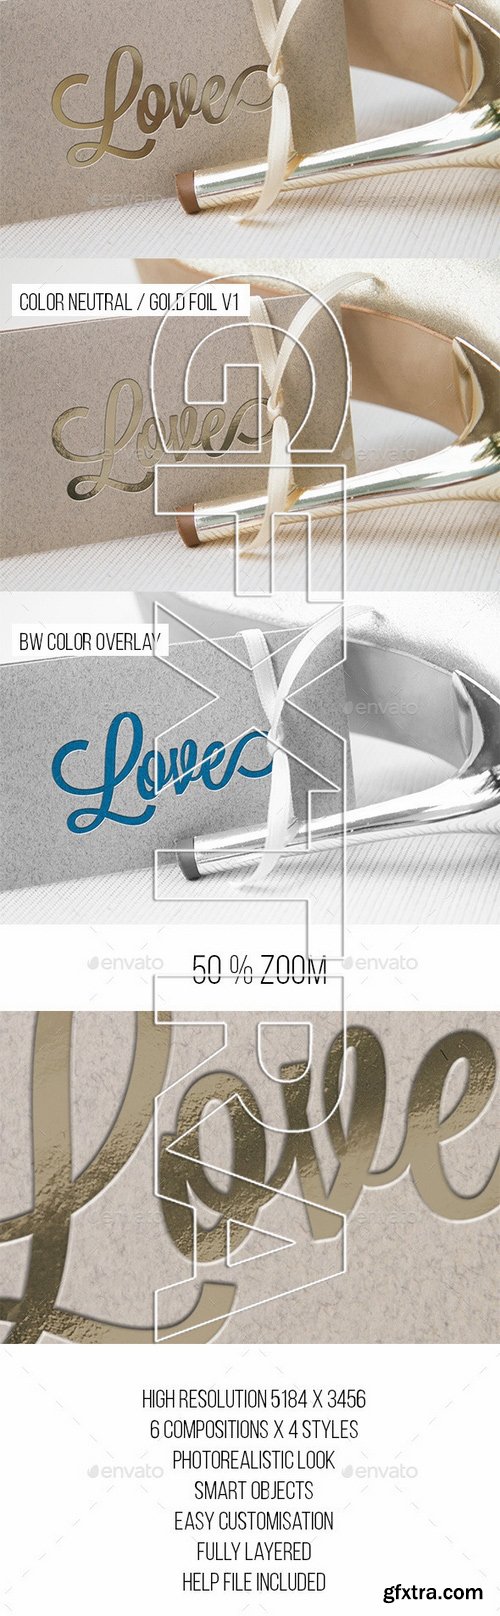 GraphicRiver - Wedding Logo Mockup Set Vol II 11555704